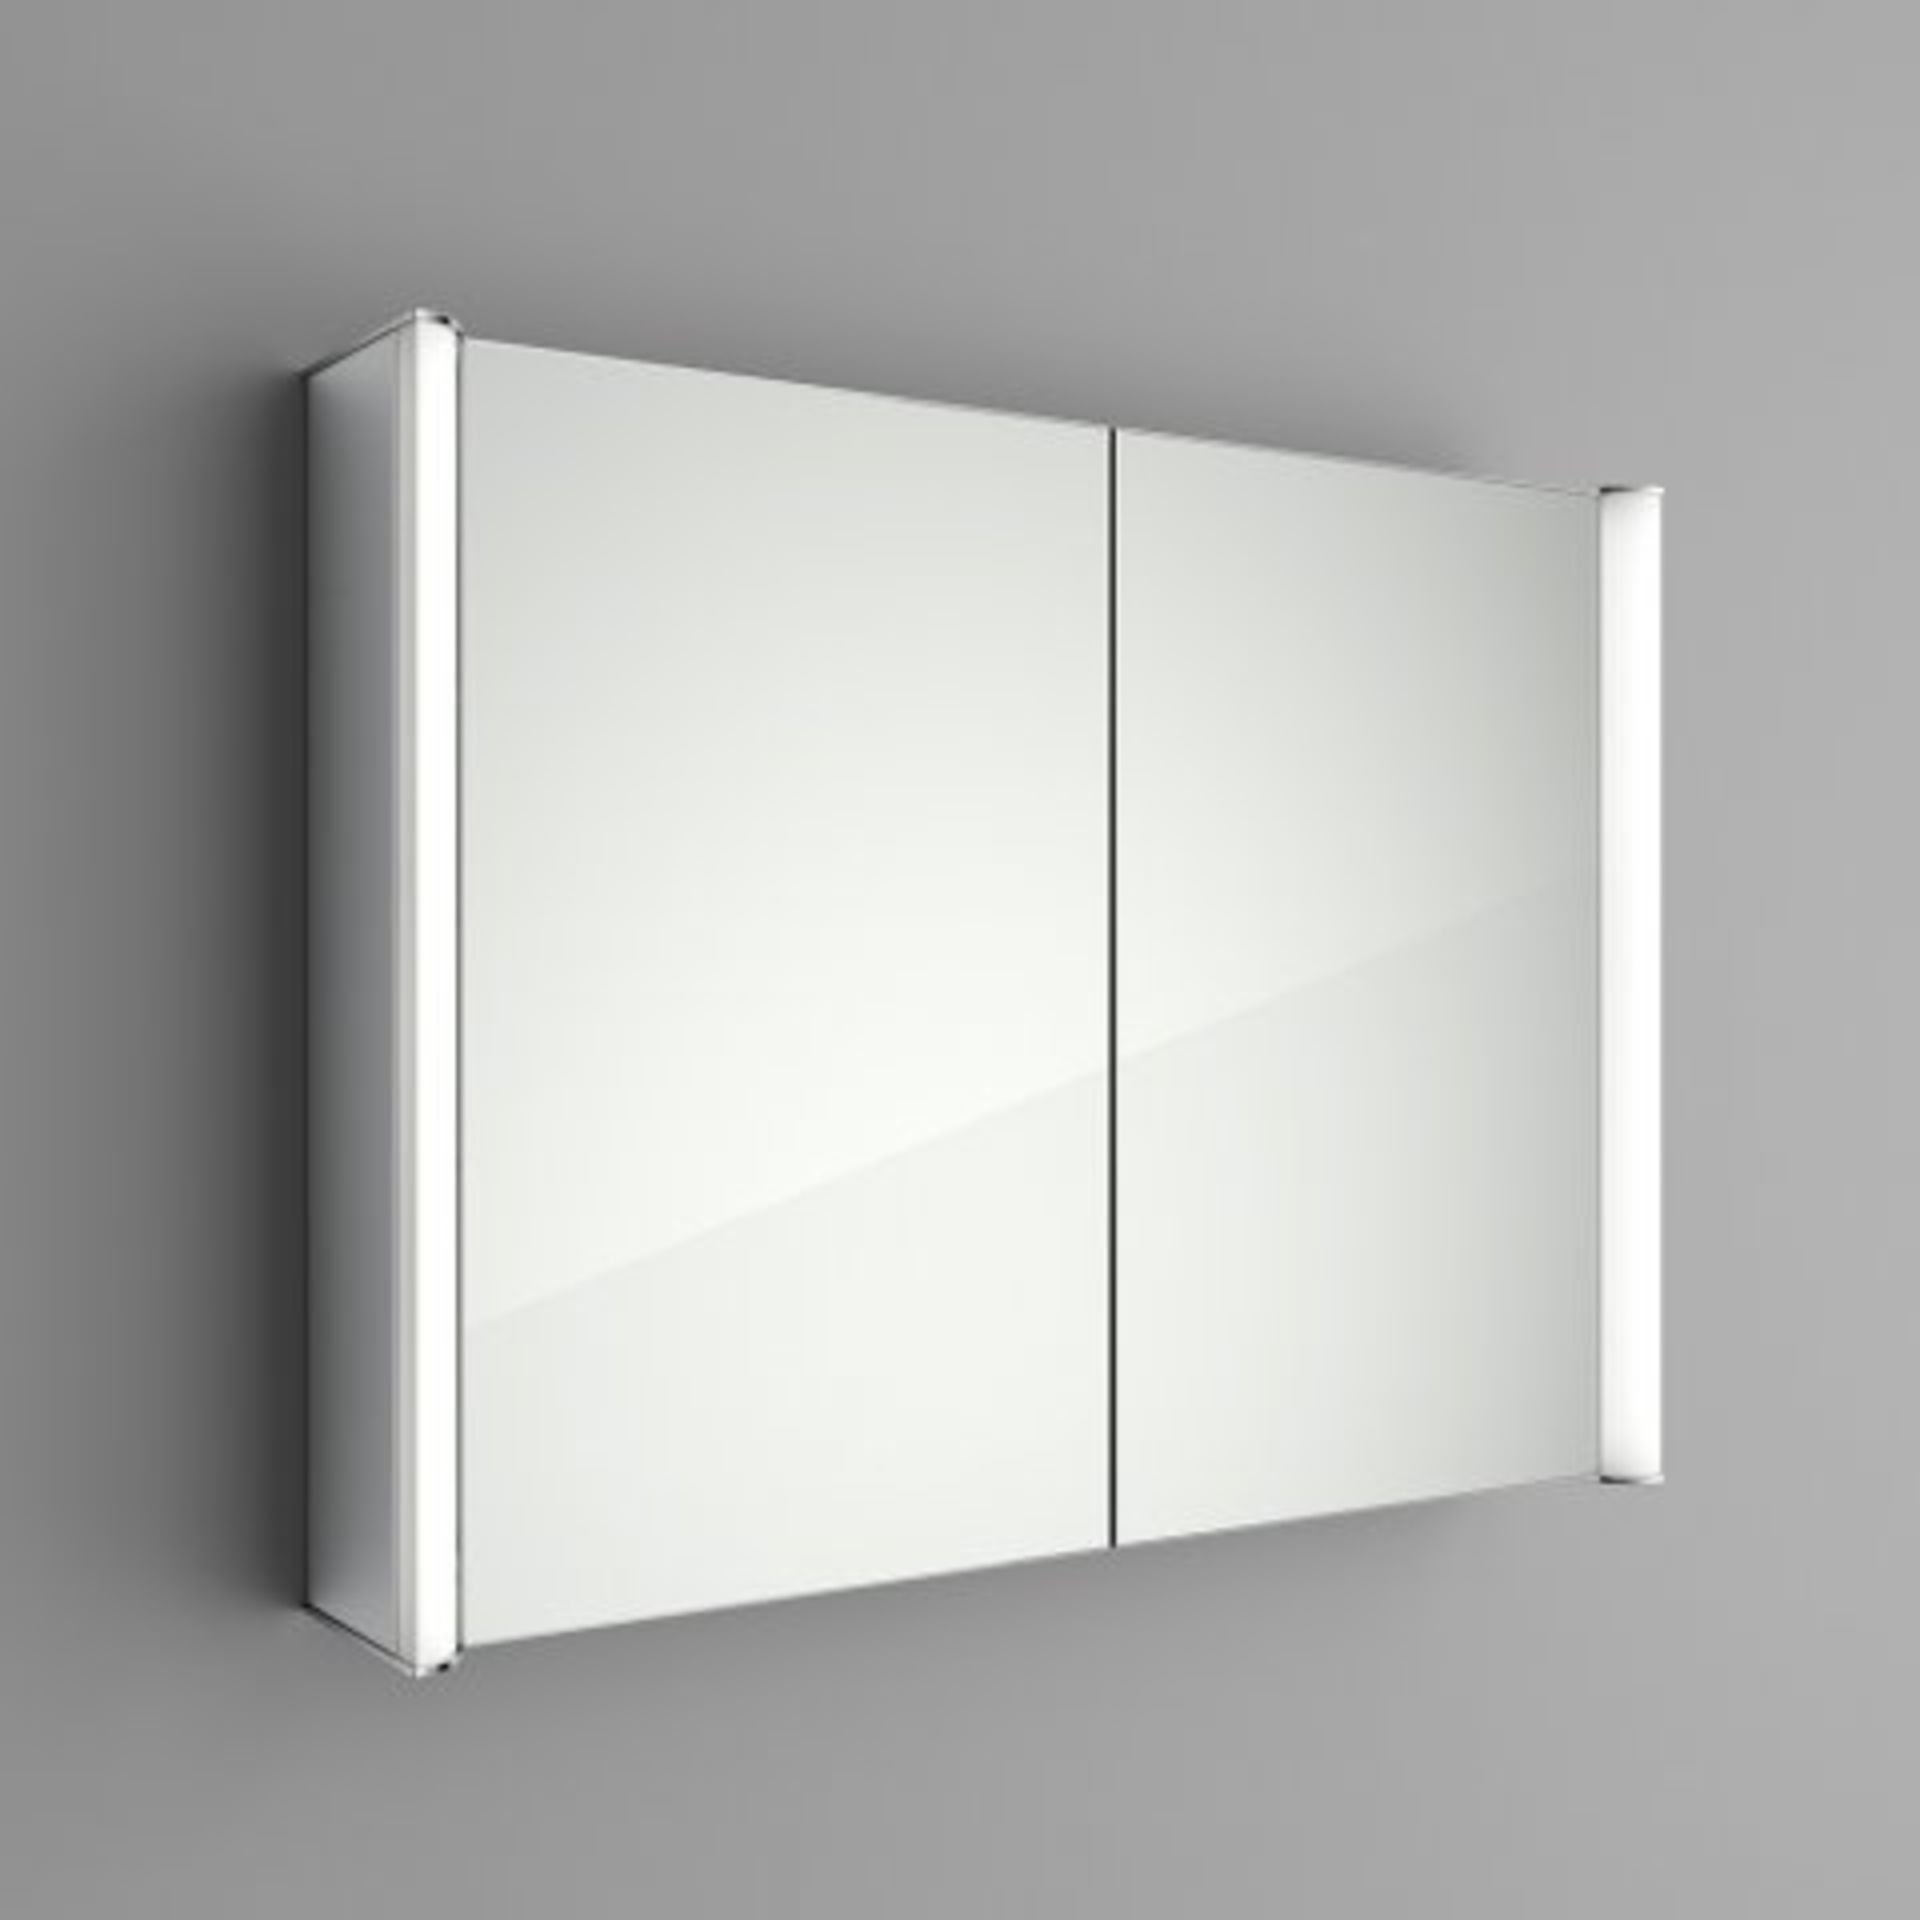 (Z37) 800x600mm Bloom Illuminated LED Mirror Cabinet & Shaver Socket. RRP £599.99. - Image 5 of 5